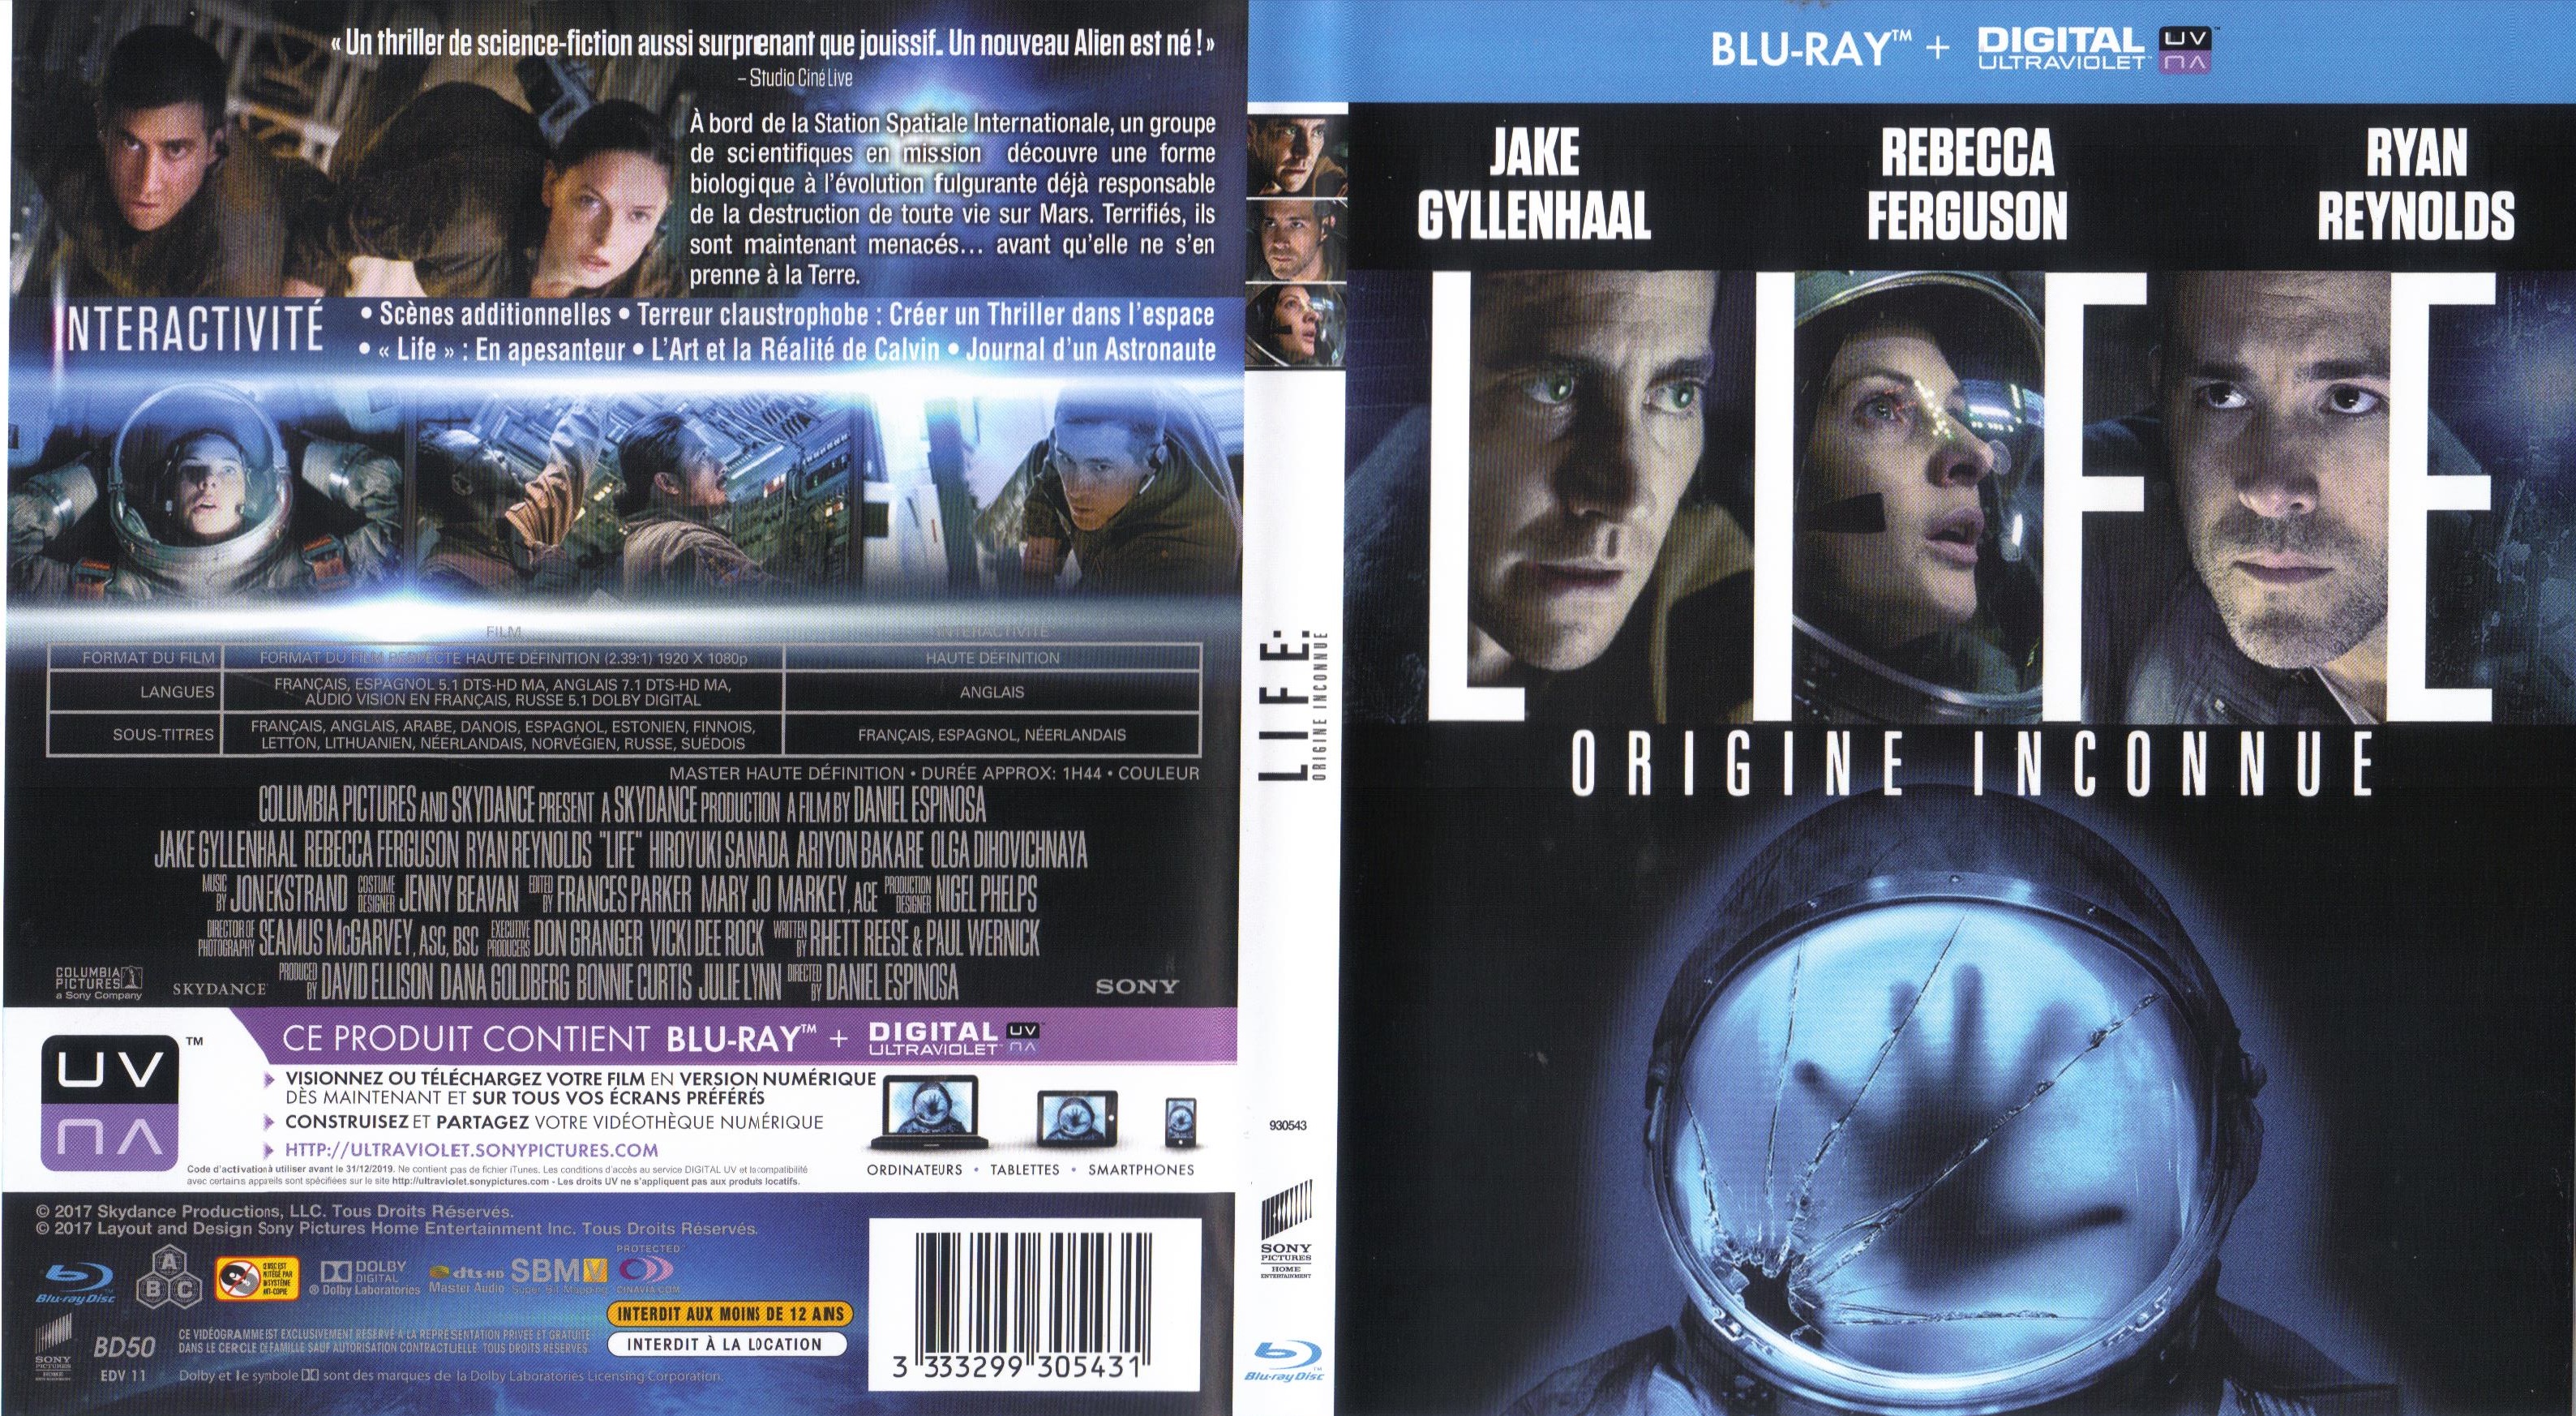 Jaquette DVD Life Origine Inconnue (BLU-RAY)